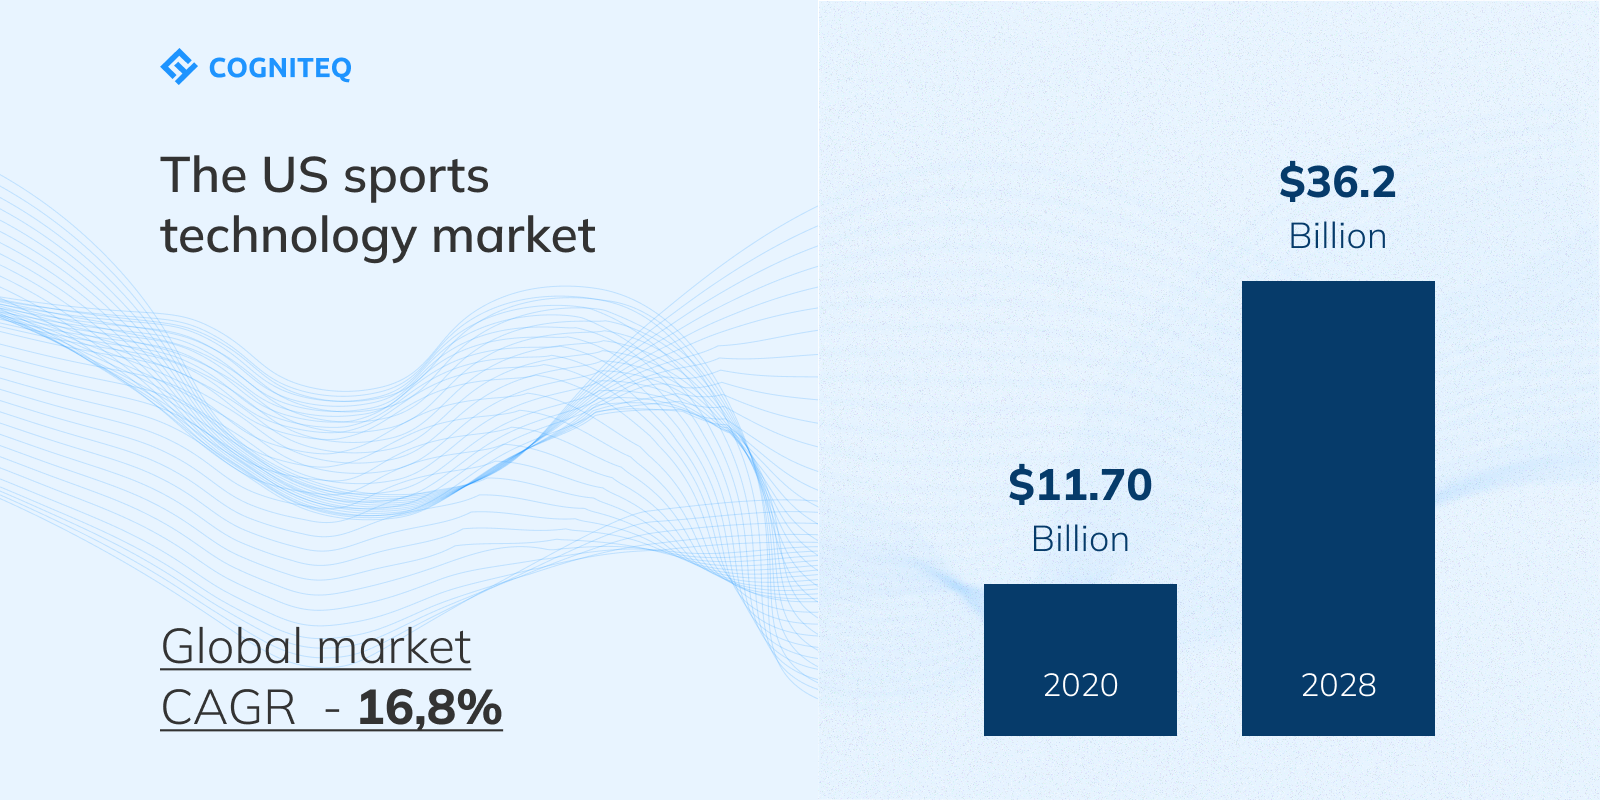 The US sports technology market